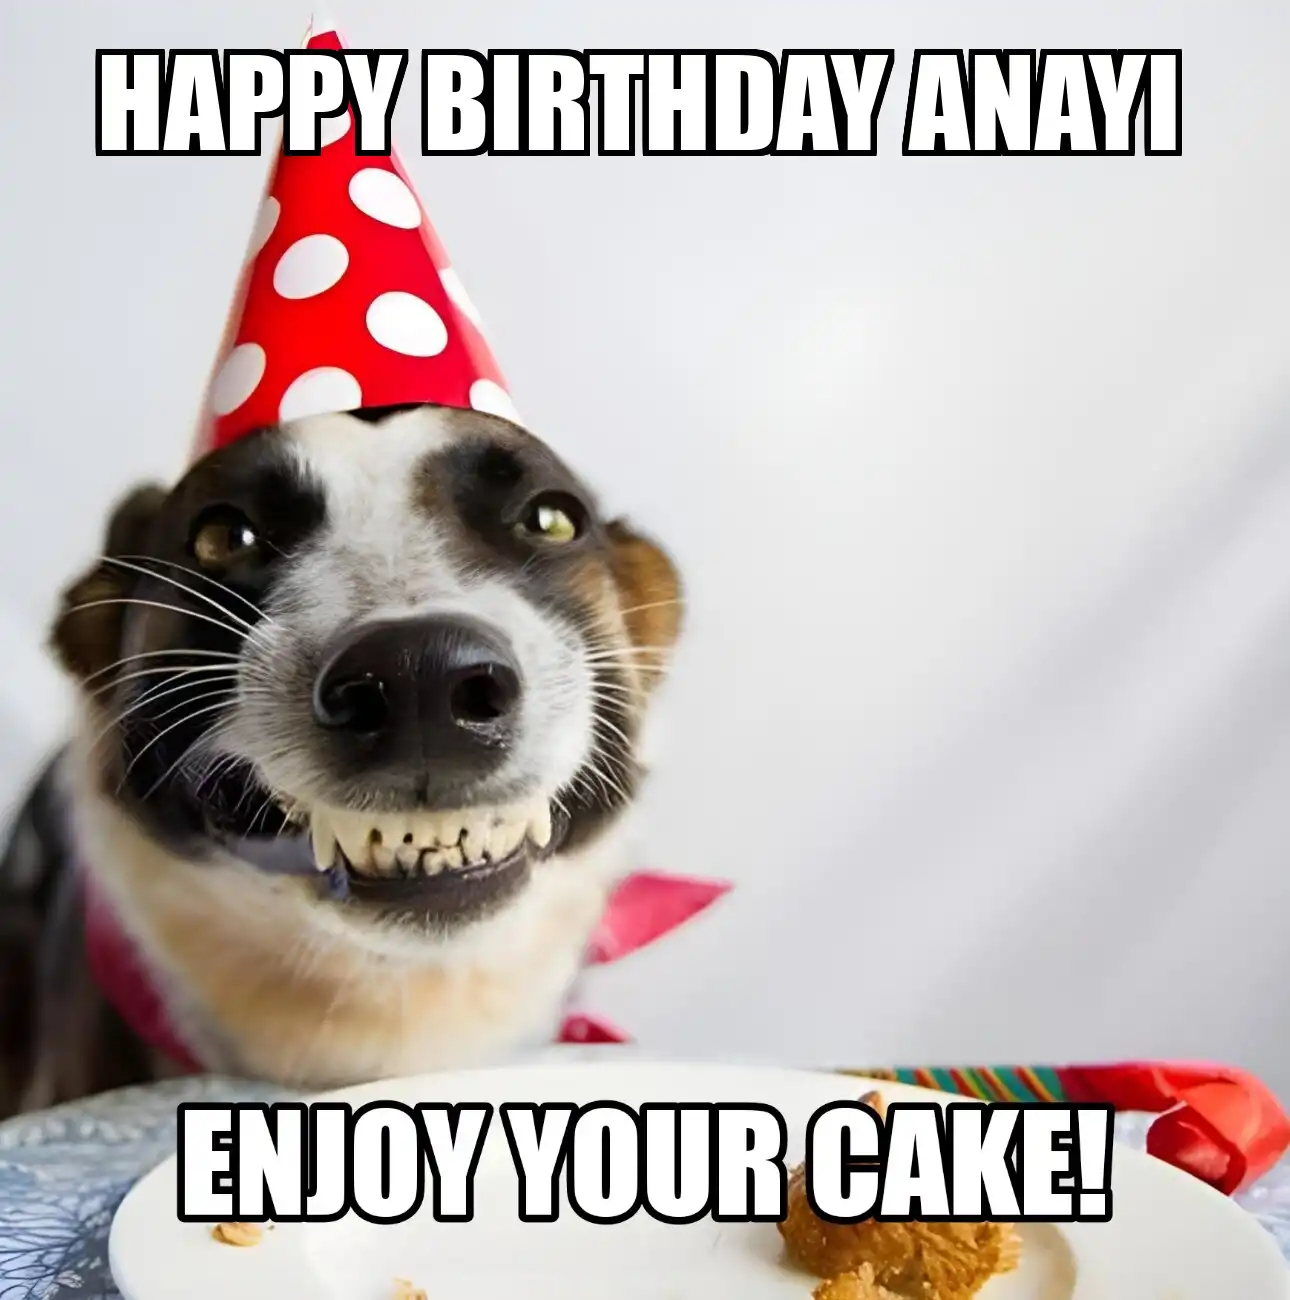 Happy Birthday Anayi Enjoy Your Cake Dog Meme